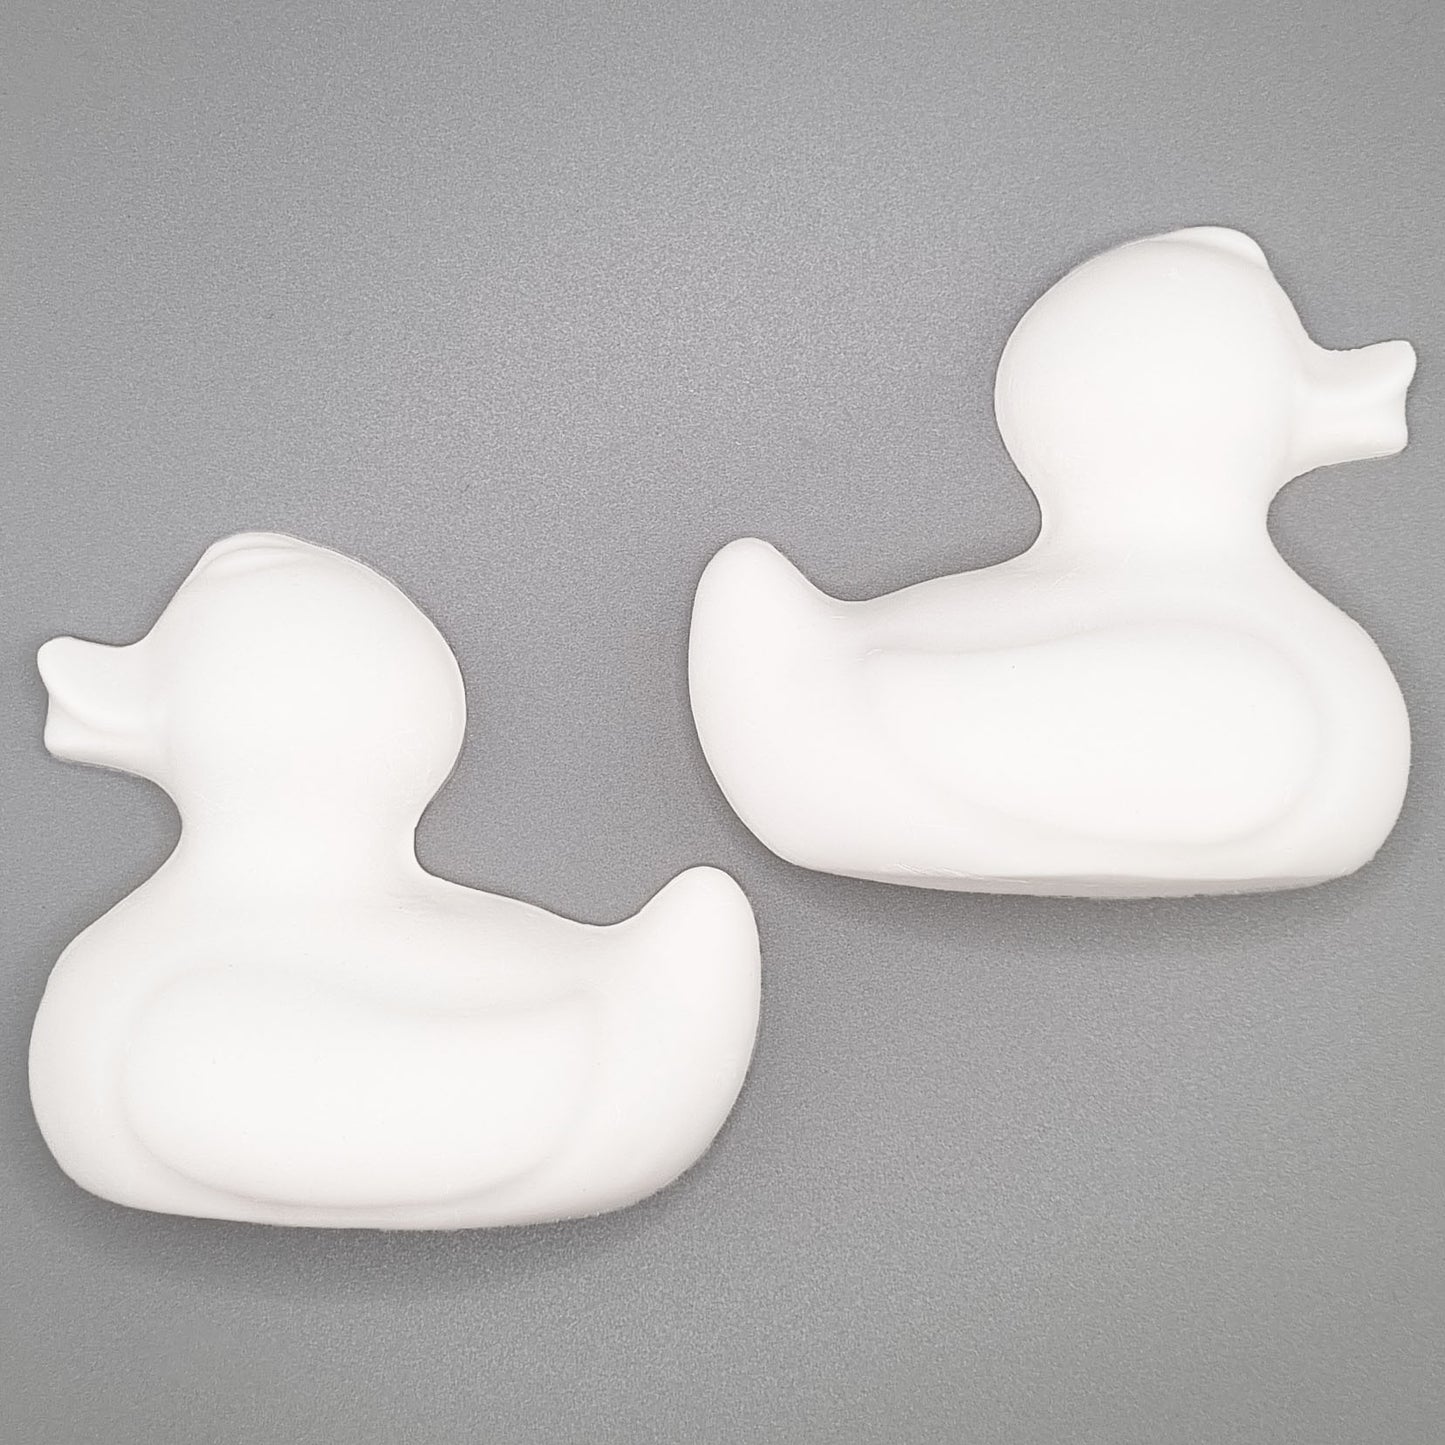 Rubber Ducky Mould | Bath Bomb, Soap | Truly Personal Ltd